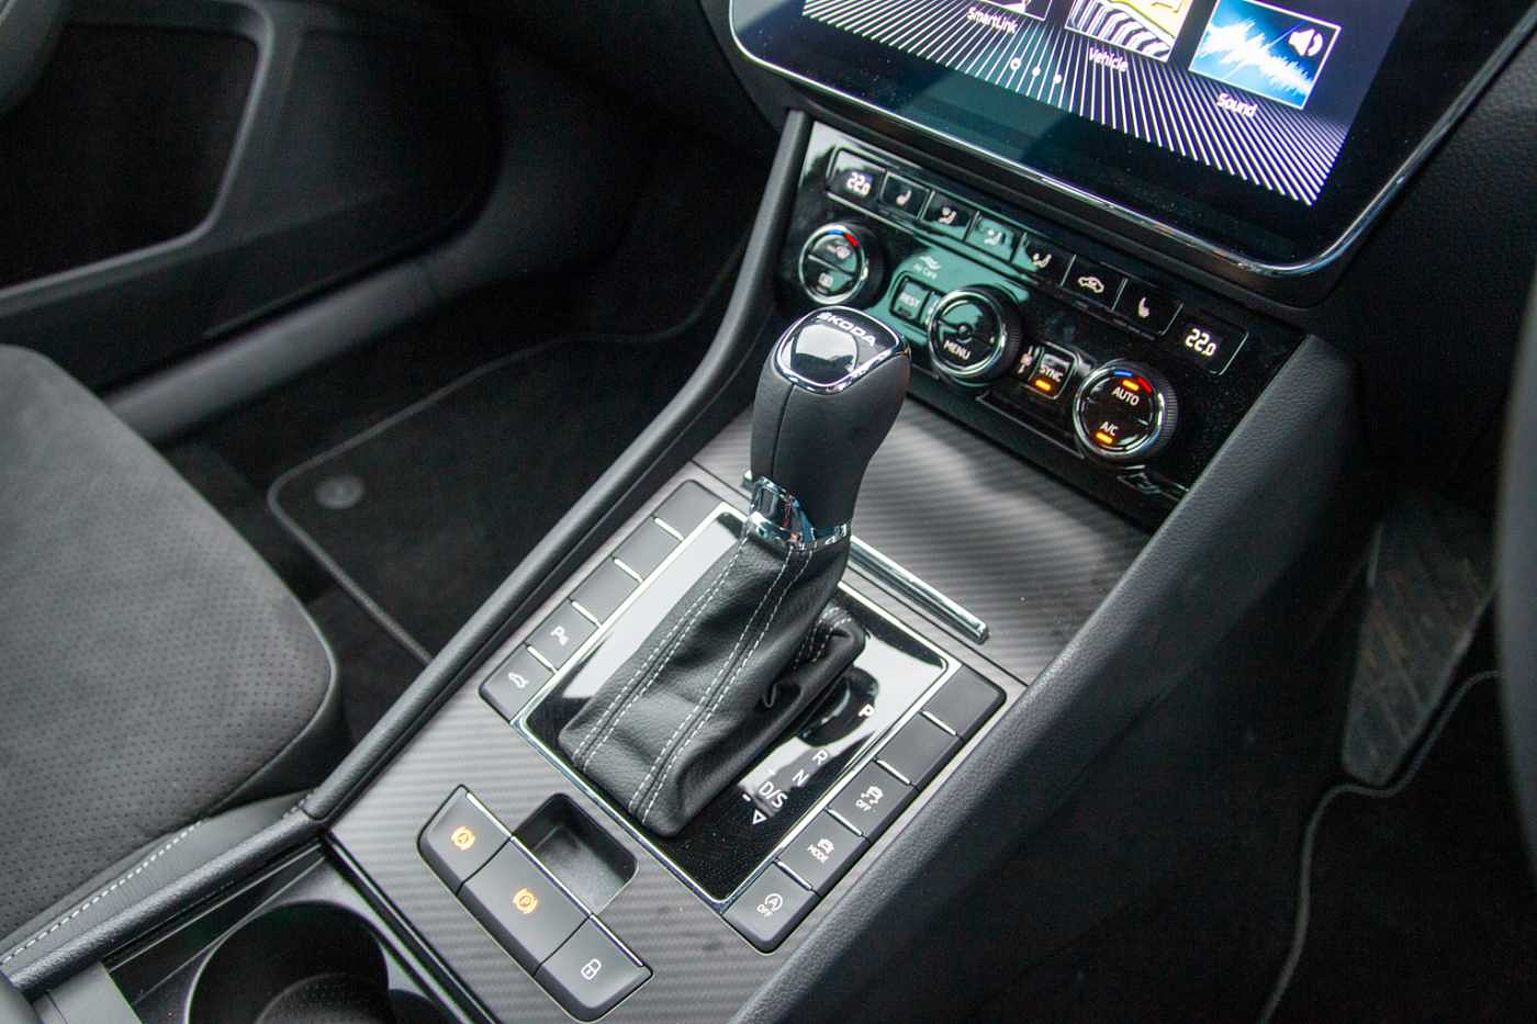 SKODA Superb 2.0 TSI (190ps) SportLine Plus DSG Hatch